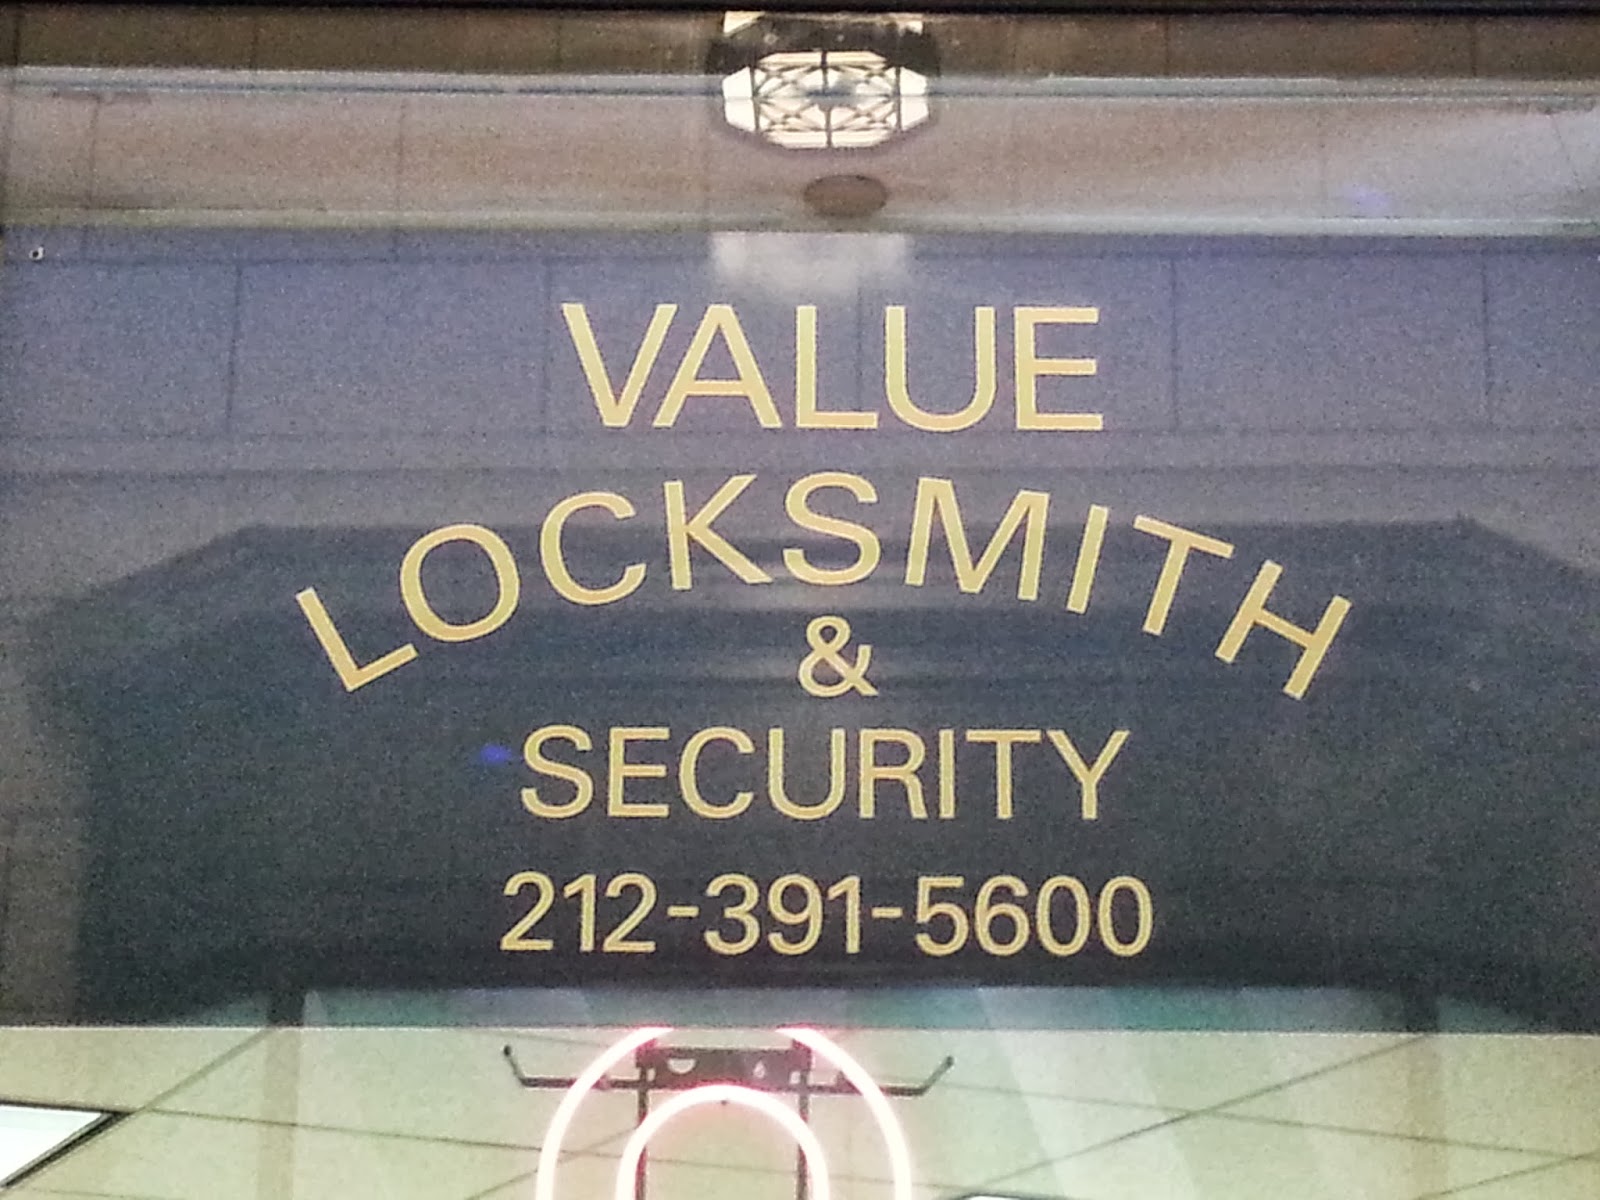 Photo of Value Locksmith in New York City, New York, United States - 4 Picture of Point of interest, Establishment, Locksmith